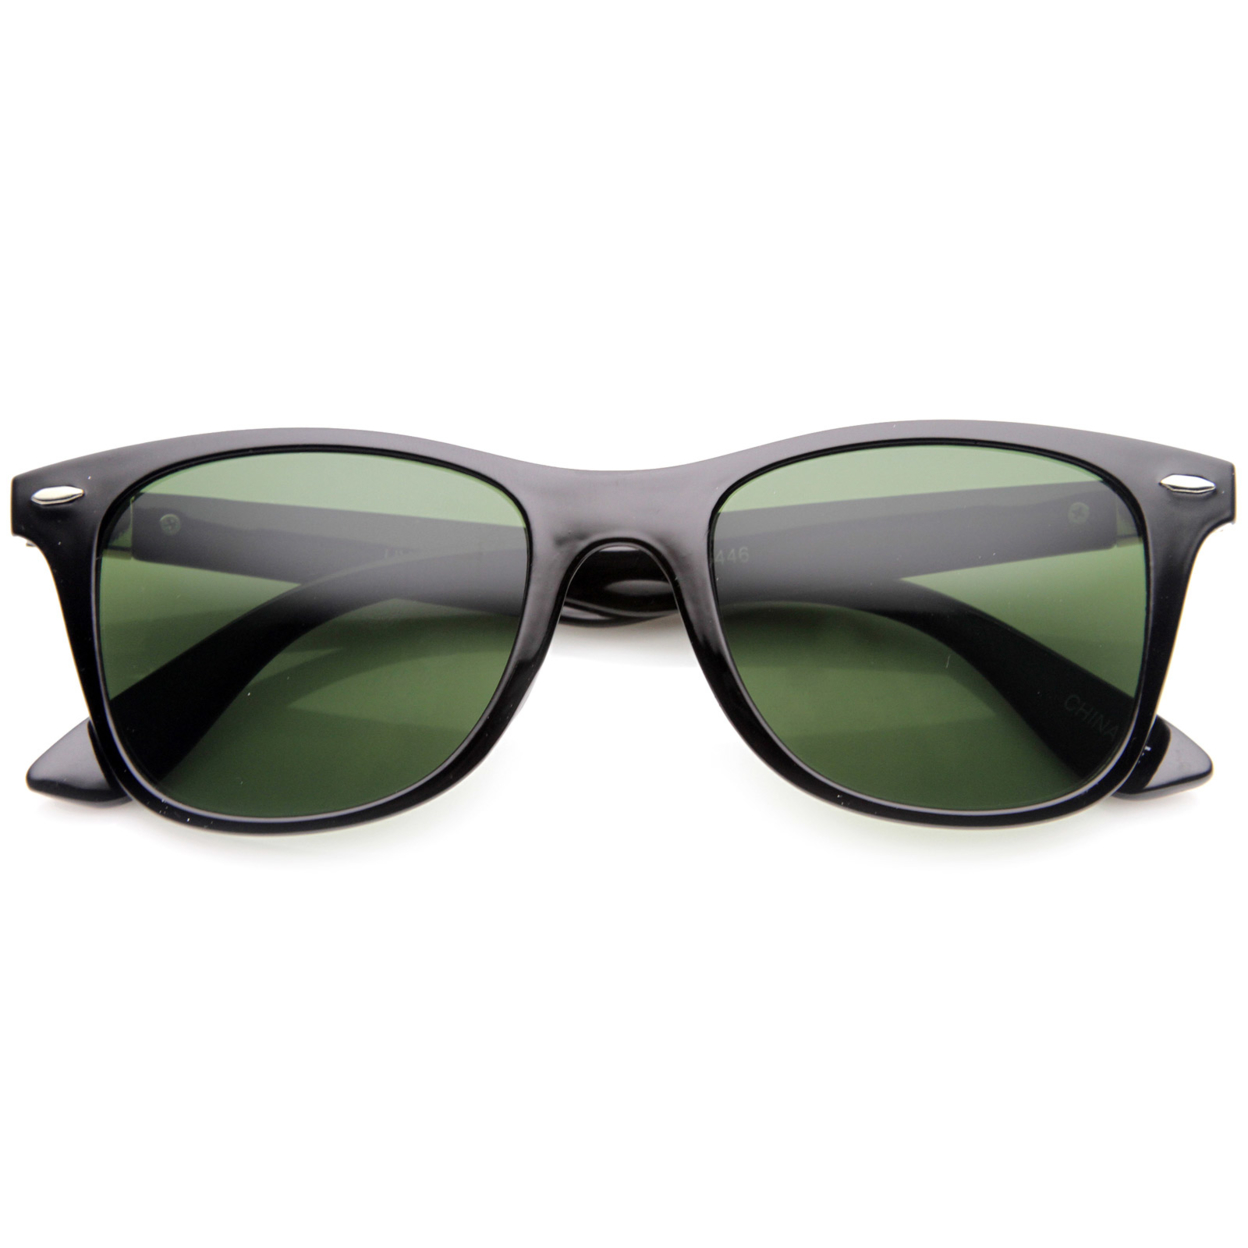 Modern Plastic Horn Rimmed Sunglasses Metal Temples 9750 - Shiny-Black Lavender